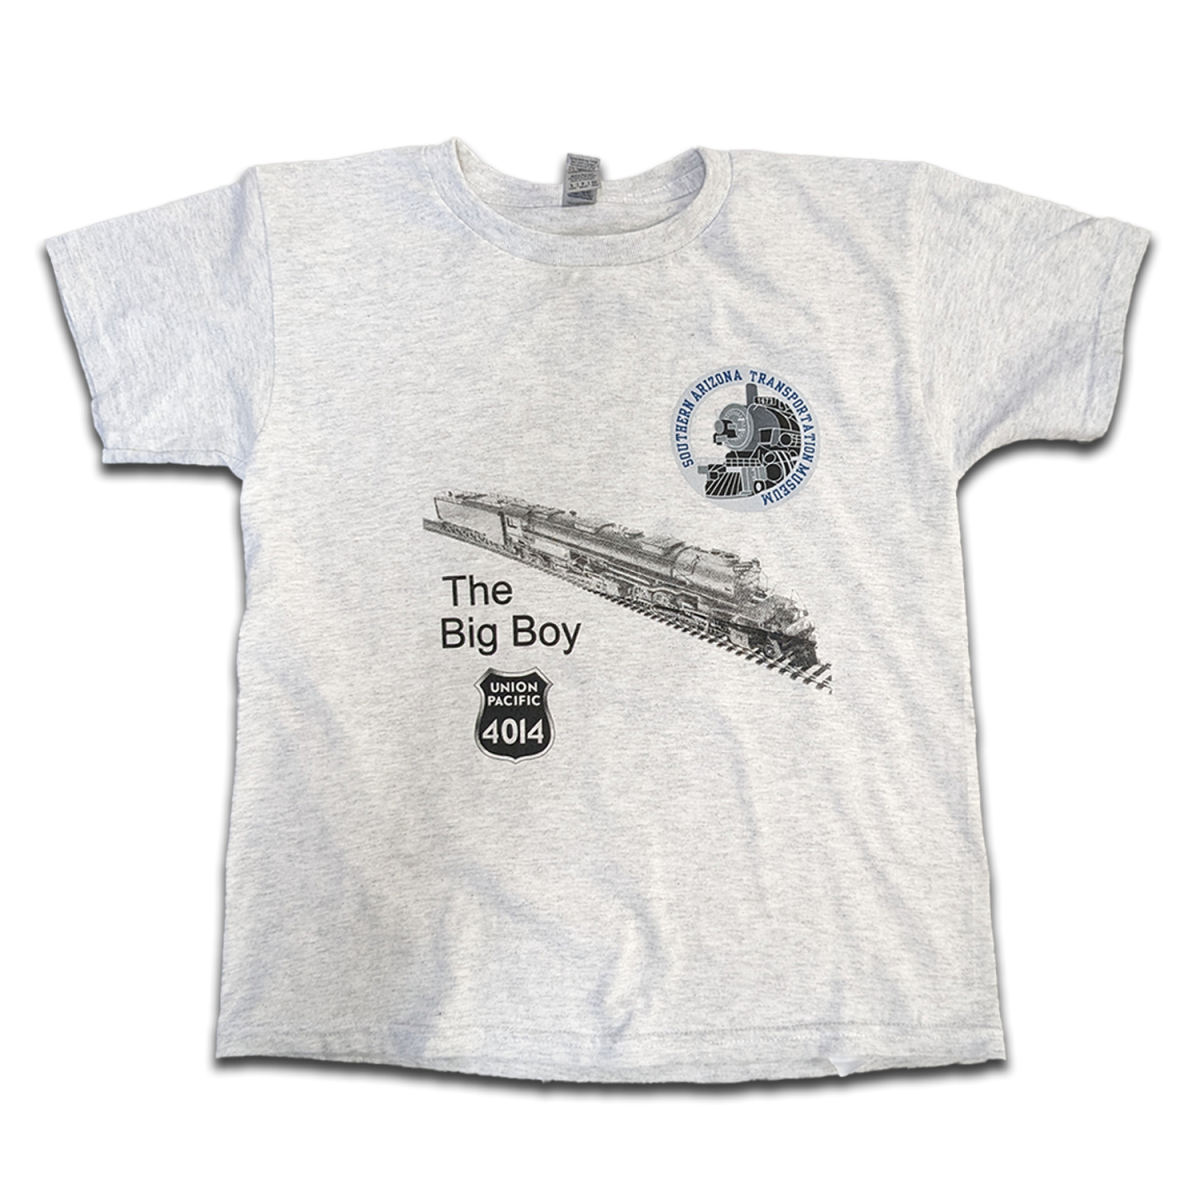 union-made-shirts-locomotive